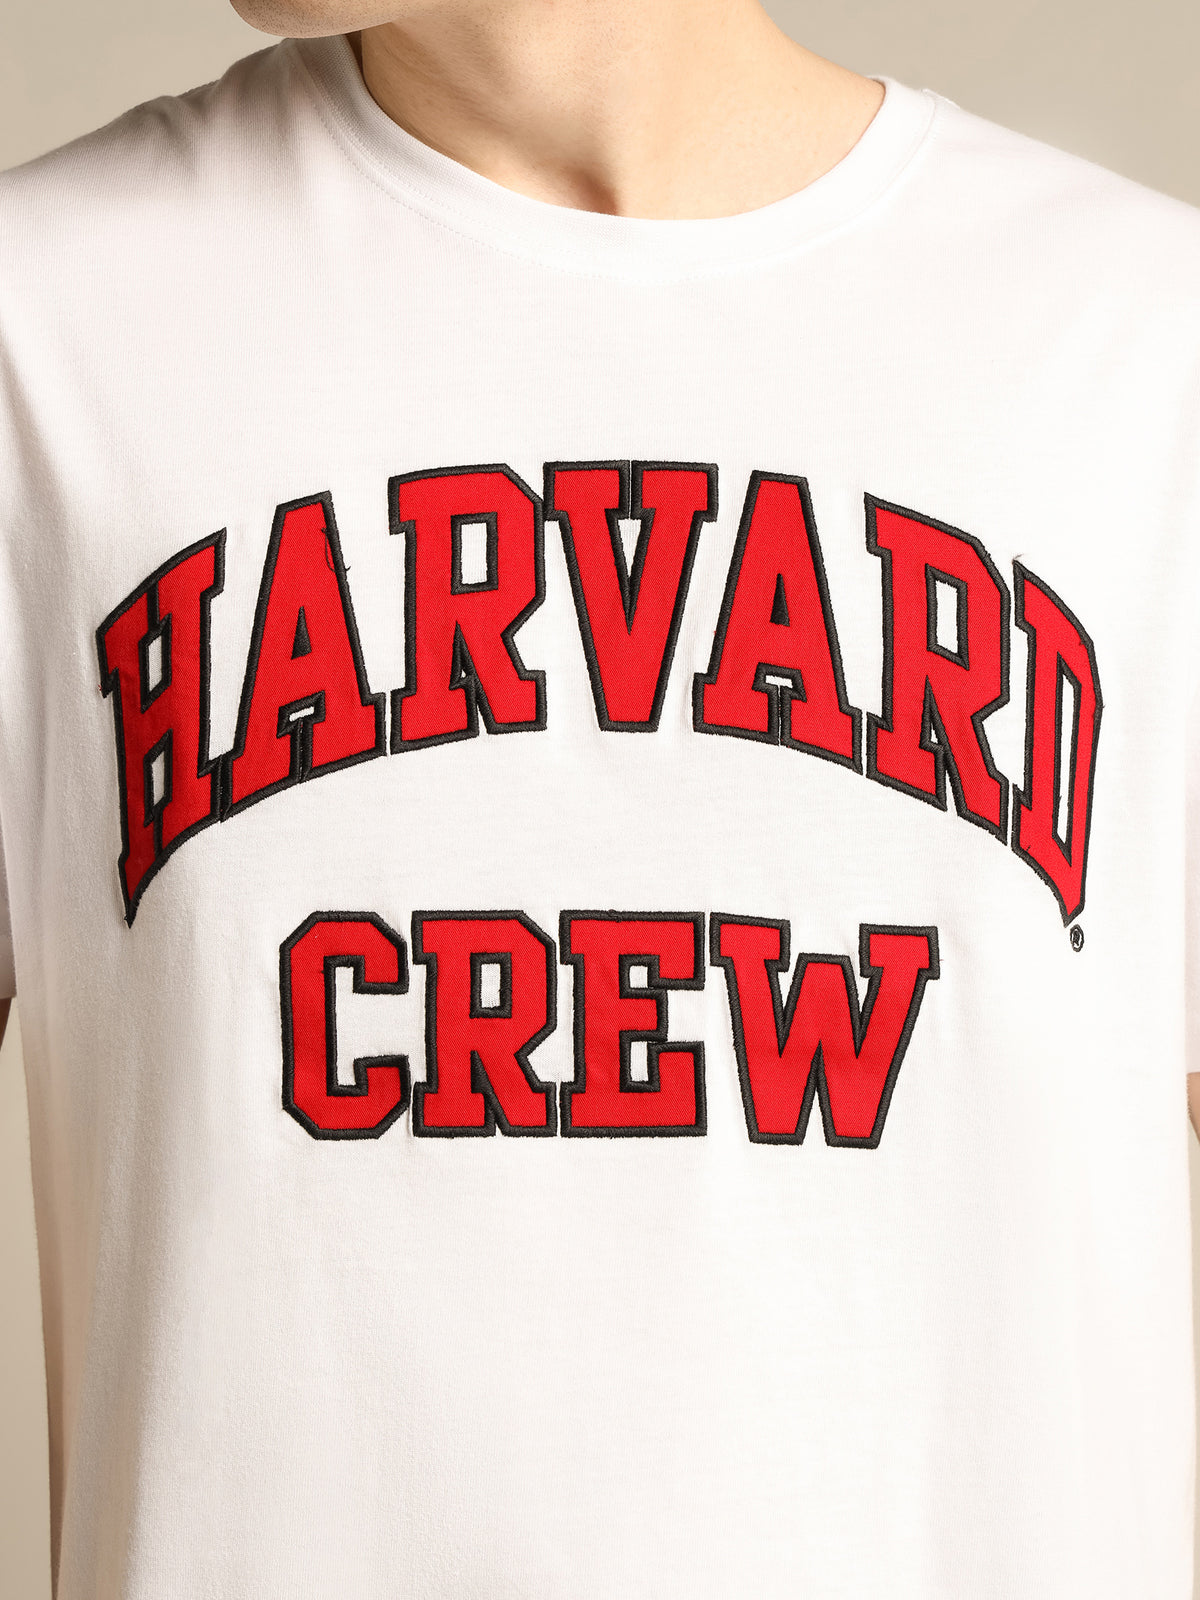 Harvard College Crew T-Shirt in White